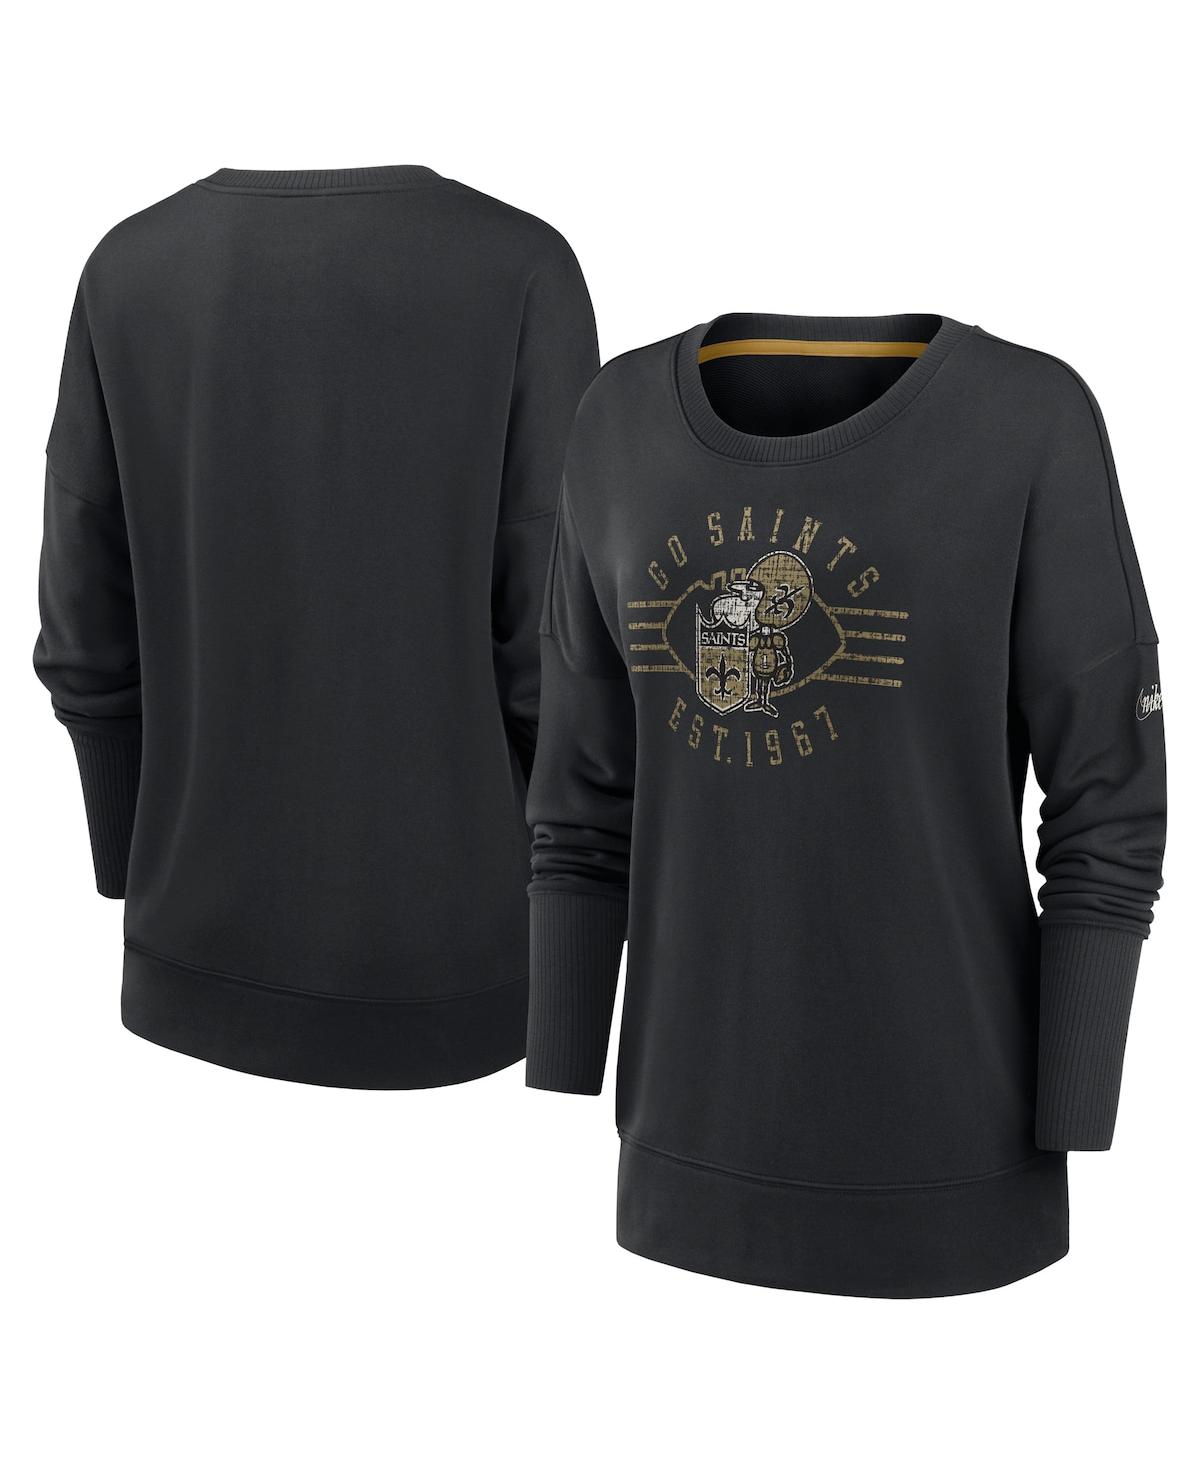 Women's Nike Black New Orleans Saints Rewind Playback Icon Performance Pullover Sweatshirt - Black